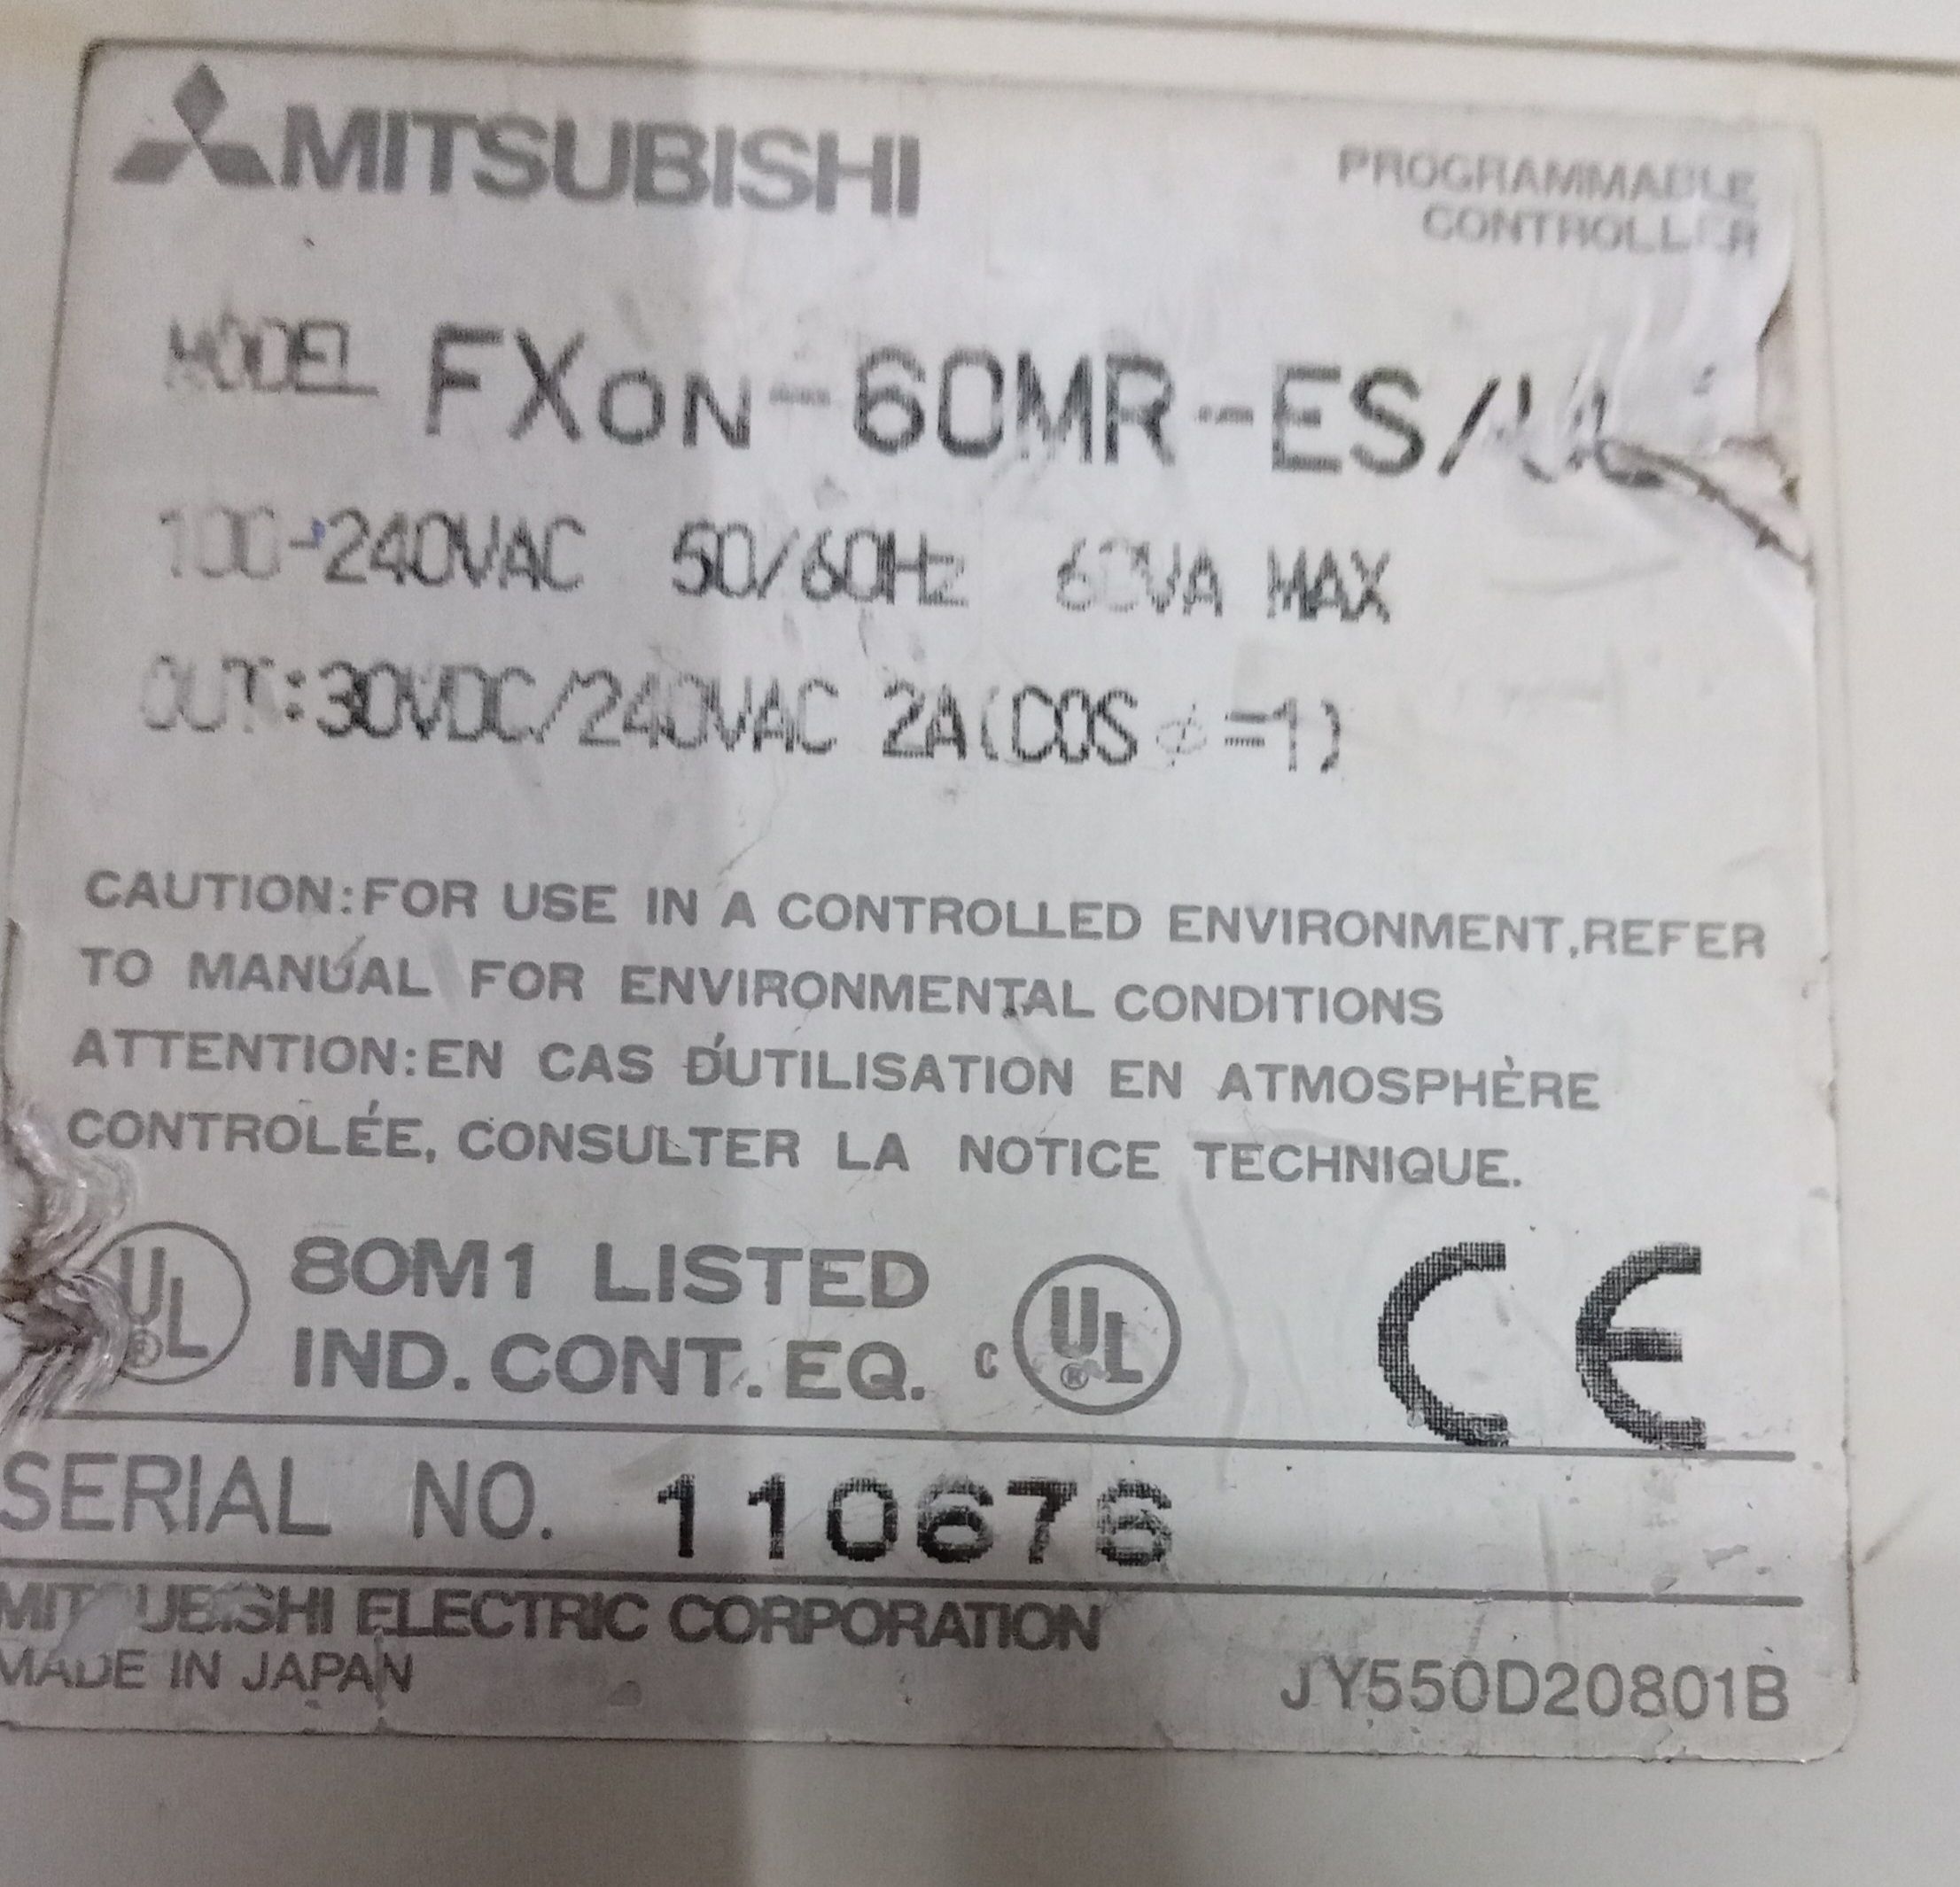 MITSUBISHI PROGRAMMABLE CONTROLLER FX0N-60MR-ES/UL